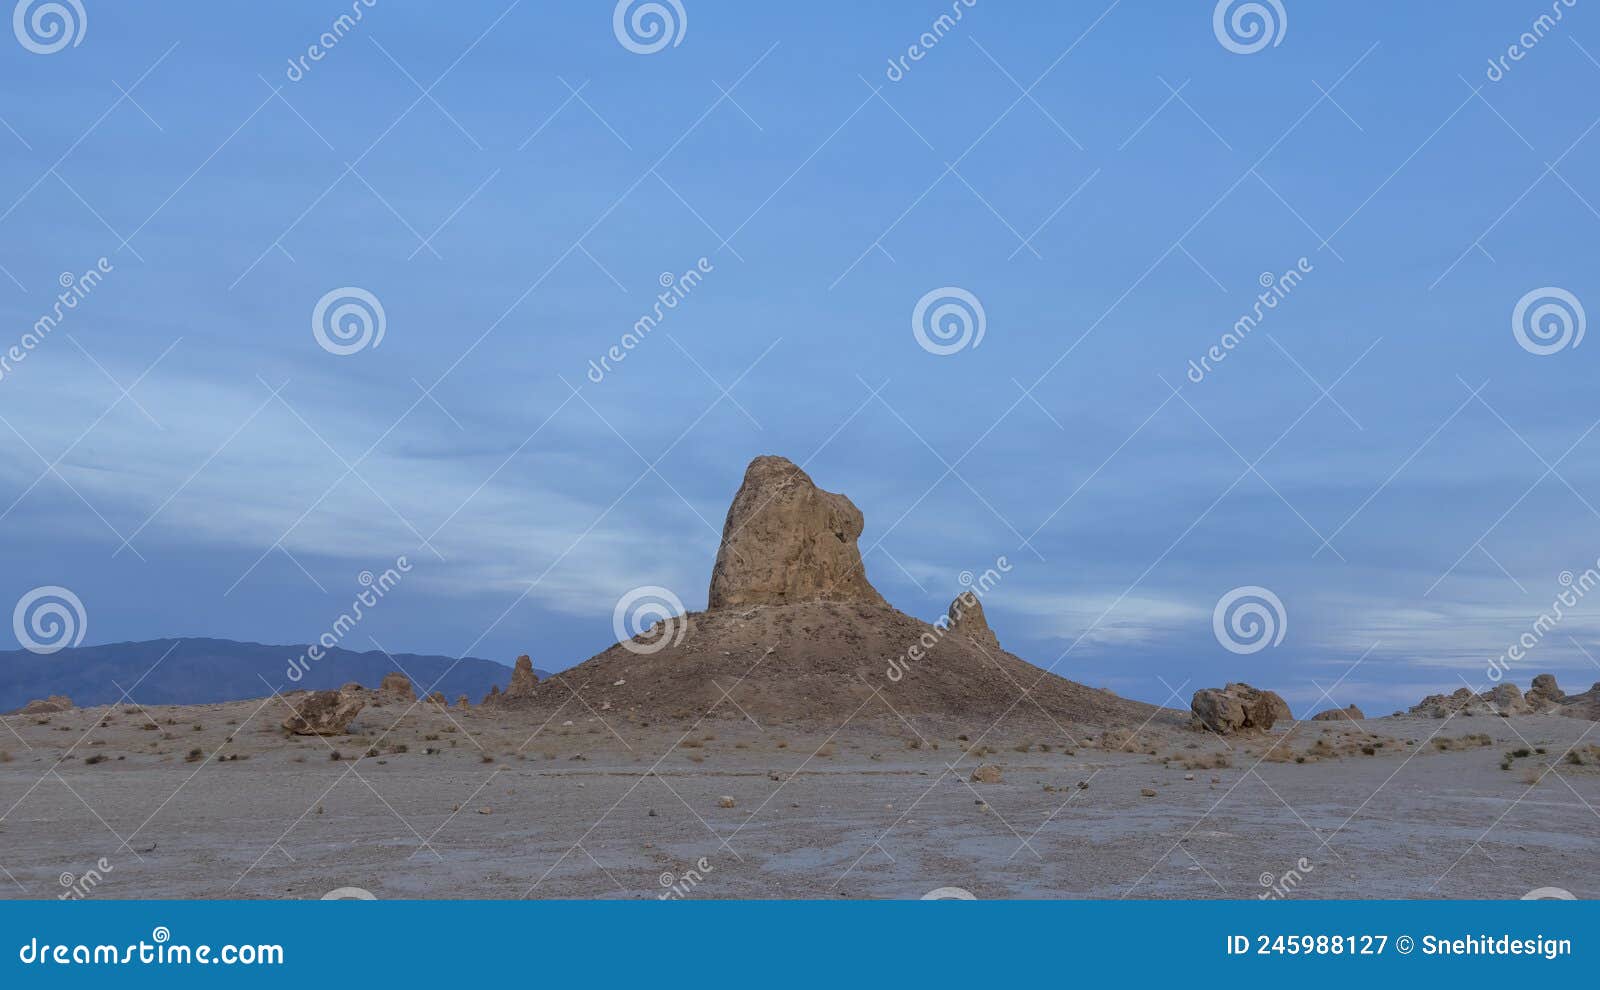 landforms of trona pinnacle shot in blue hour